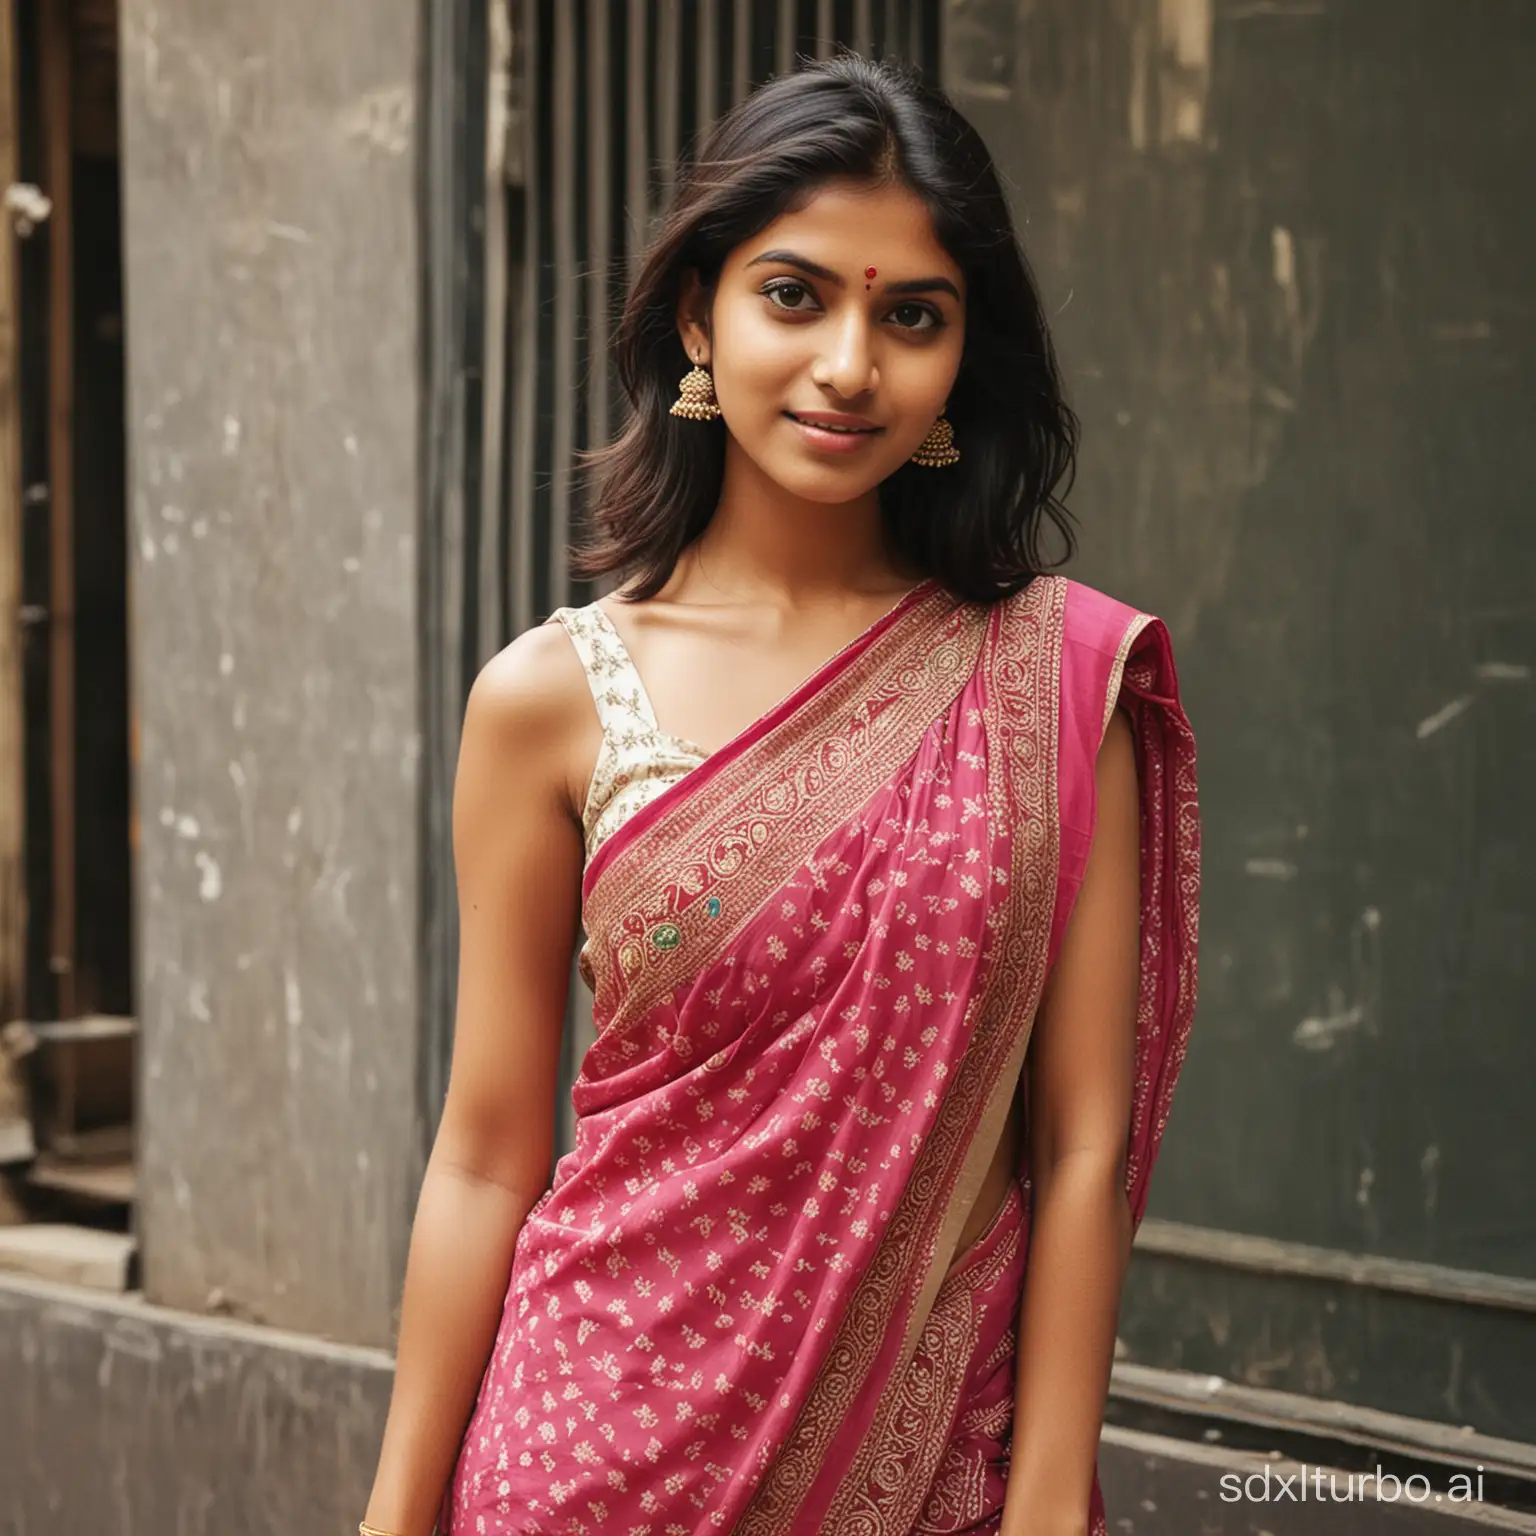 Stylish-South-Bombay-Indian-Girl-Embracing-Modernity